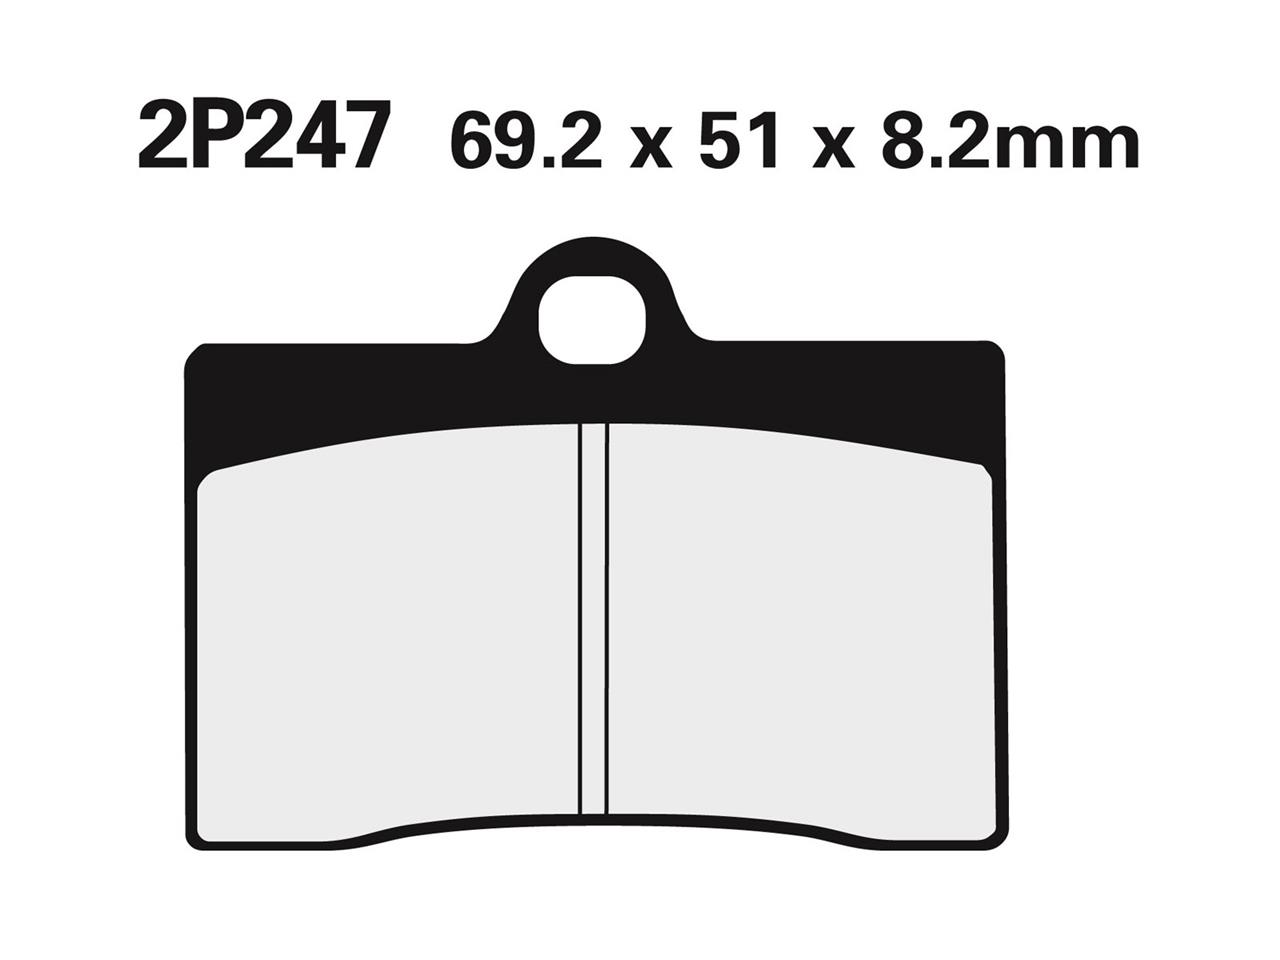 Plaquettes de frein semi-métalliques Nissin 2P-247NS | KAWASAKI, SUZUKI